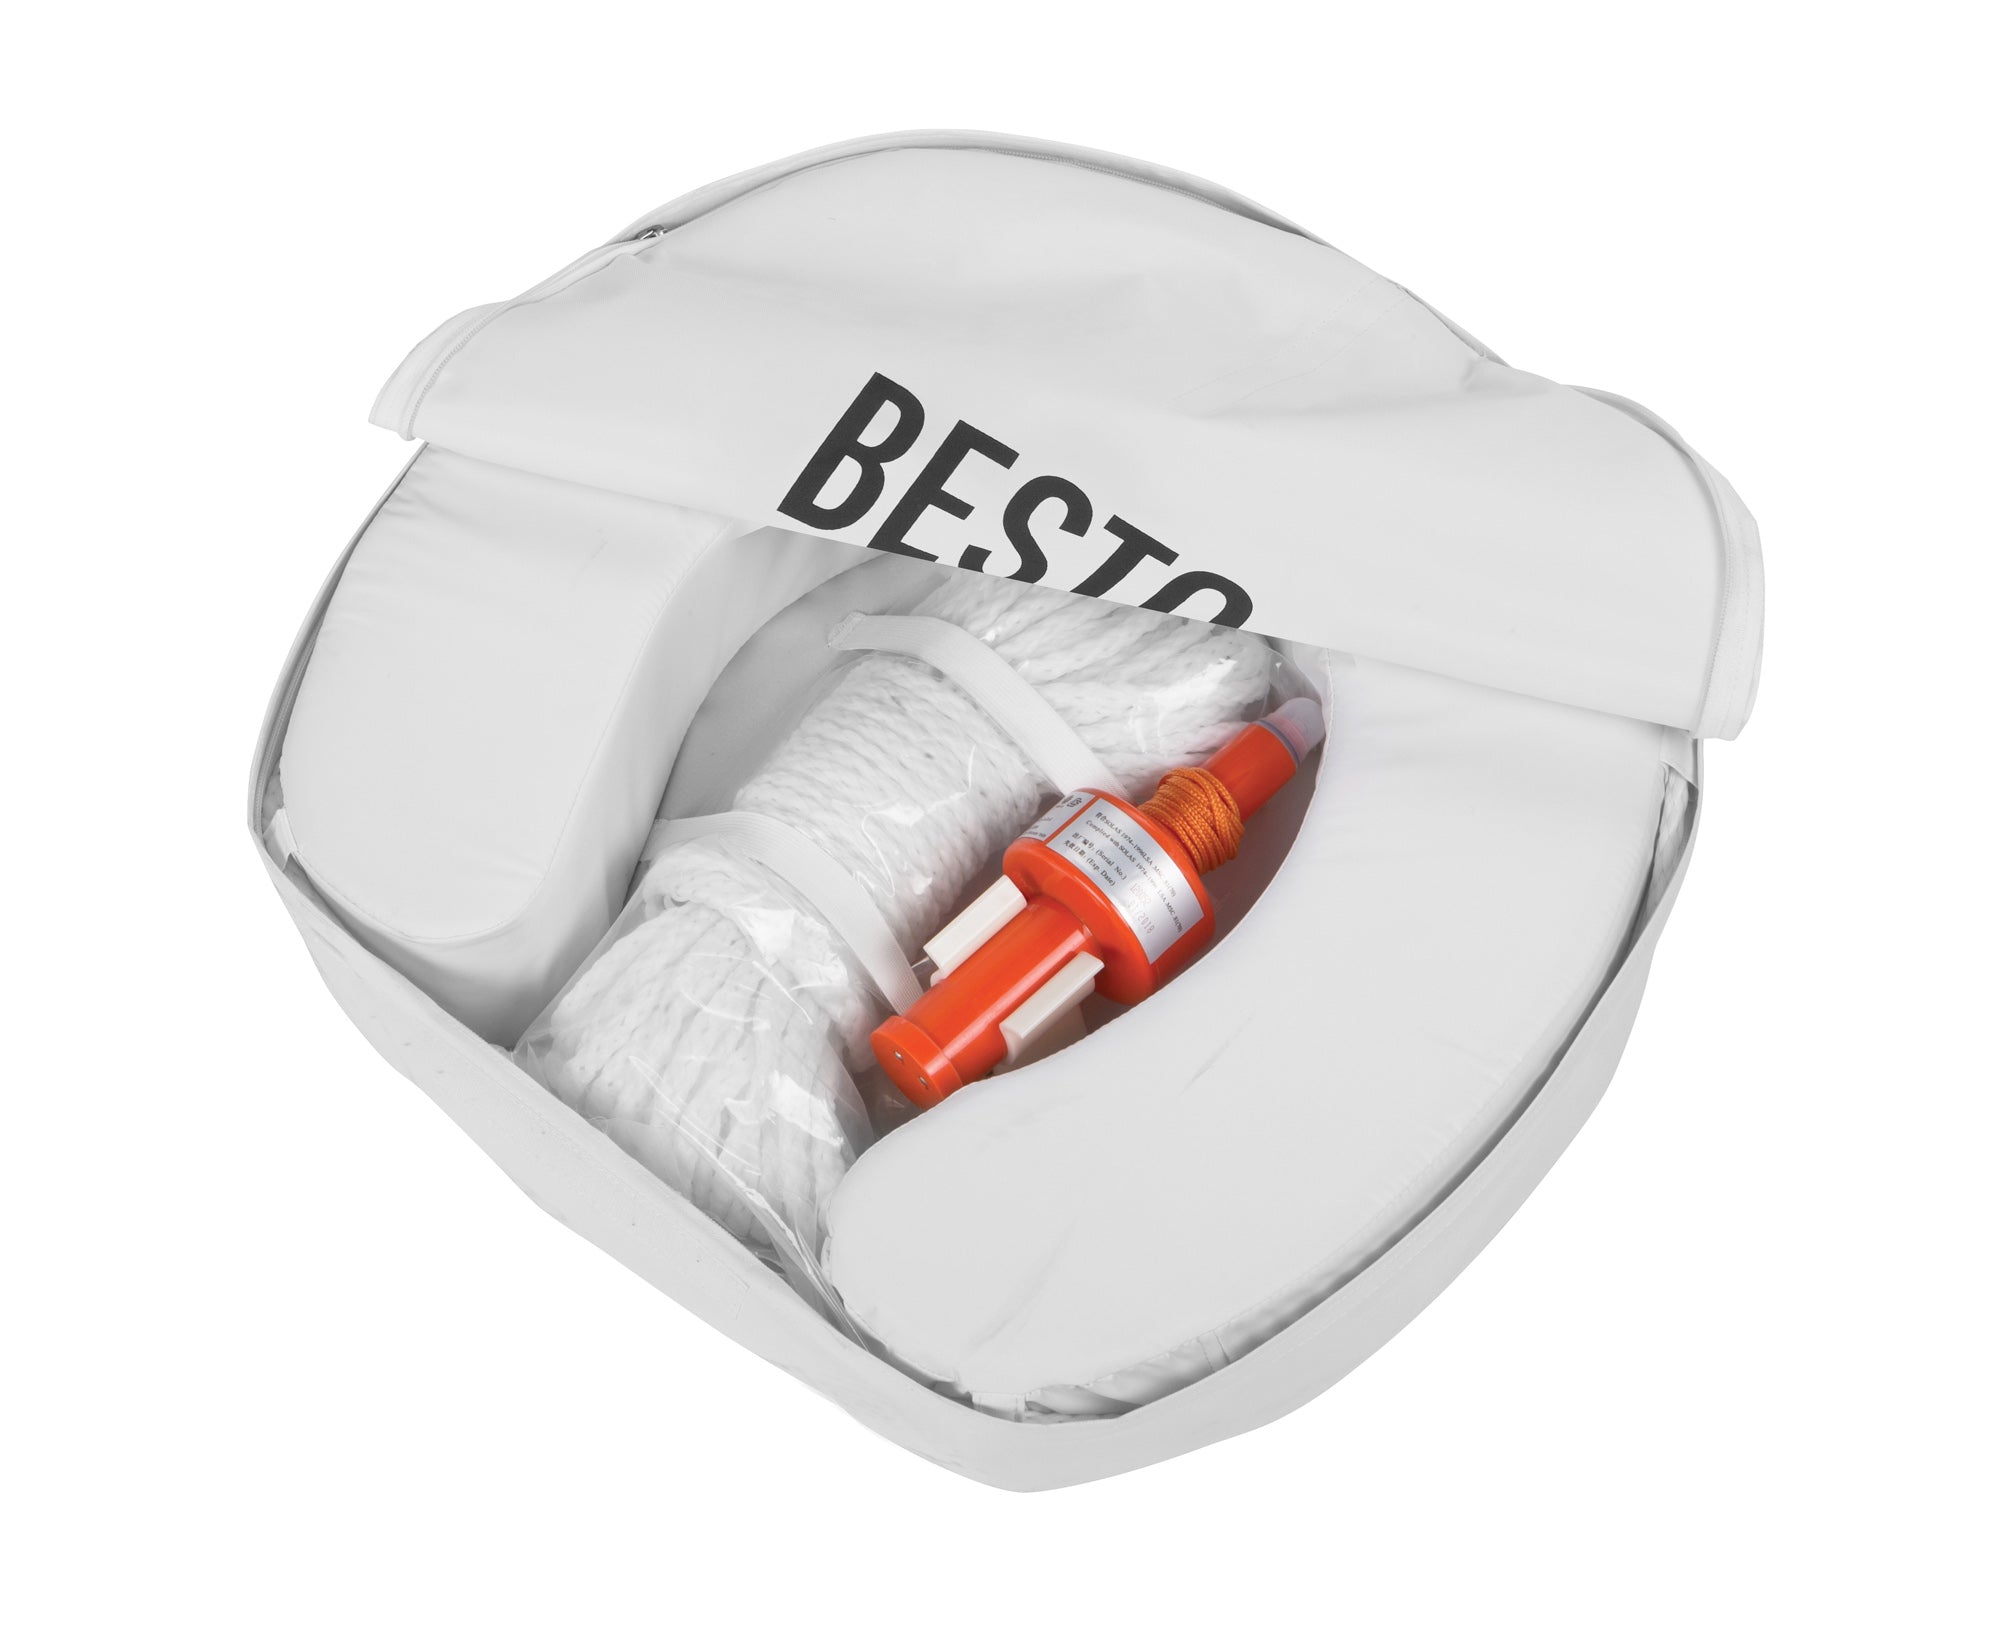 safety kit white with Besto logo